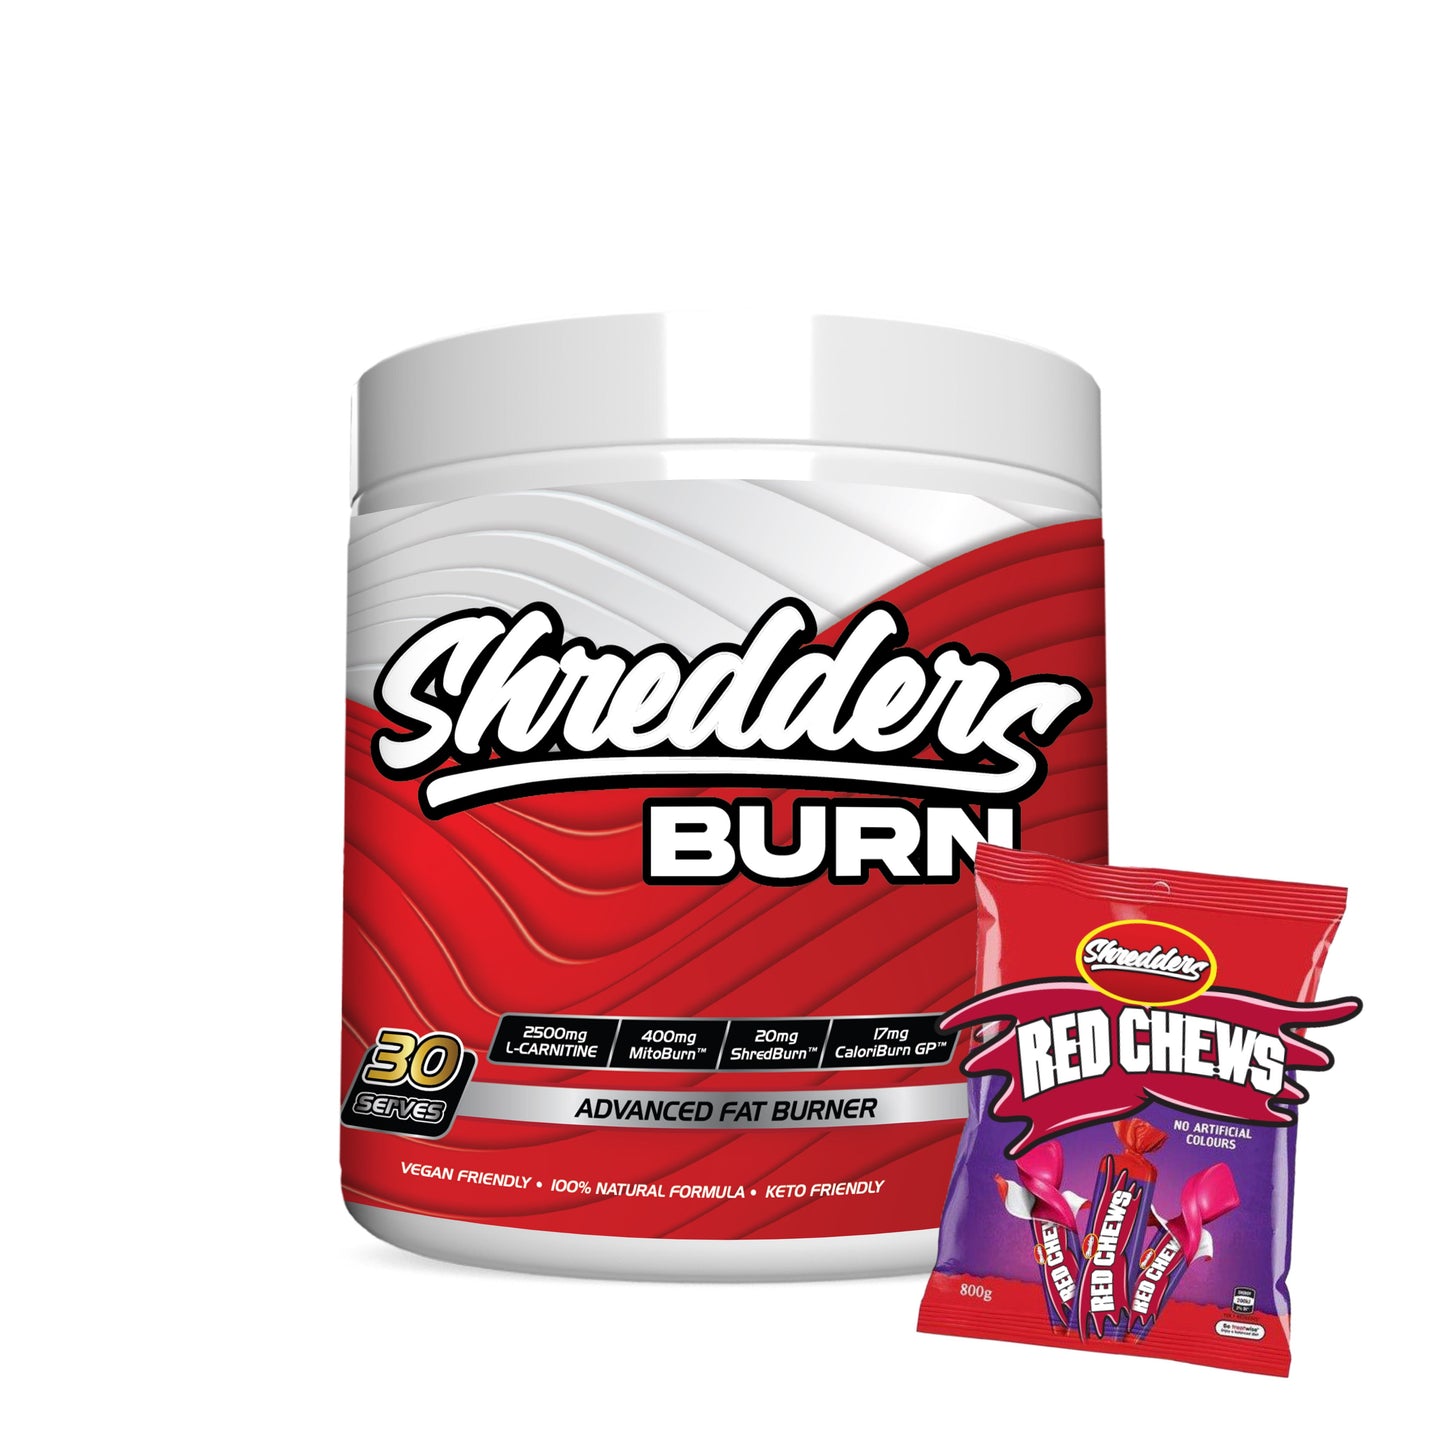 SHREDDERS BURN - Fat Burner